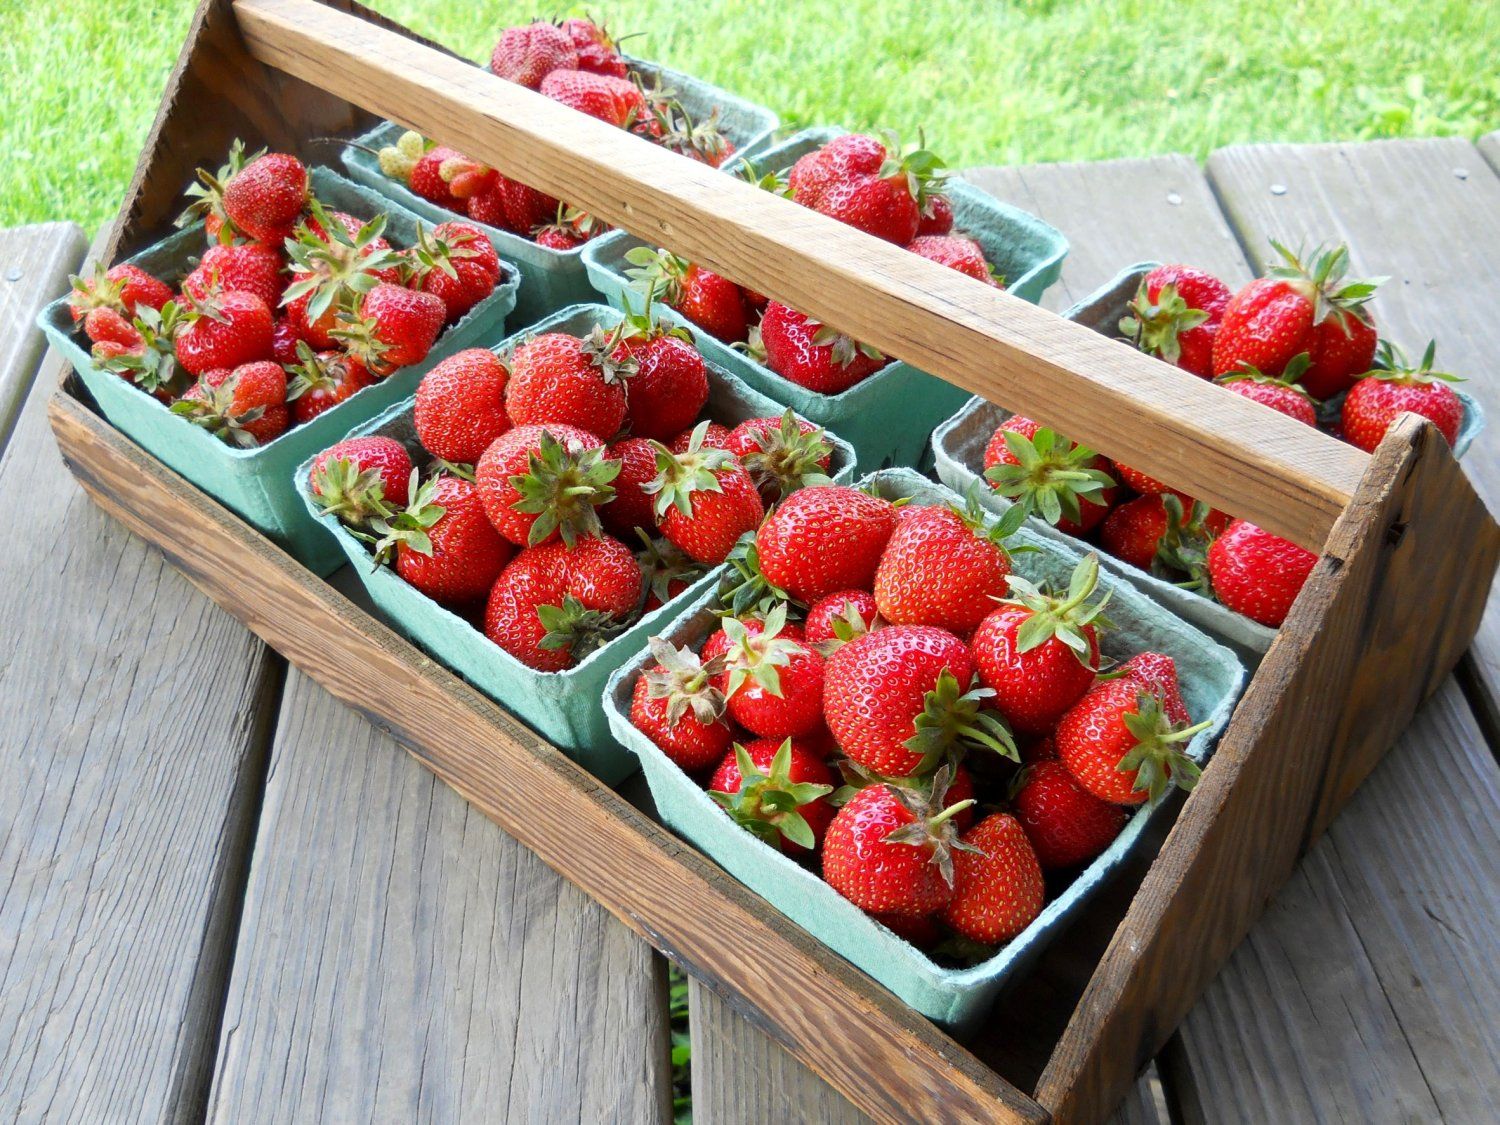 Next Happening: Start of Strawberry Season